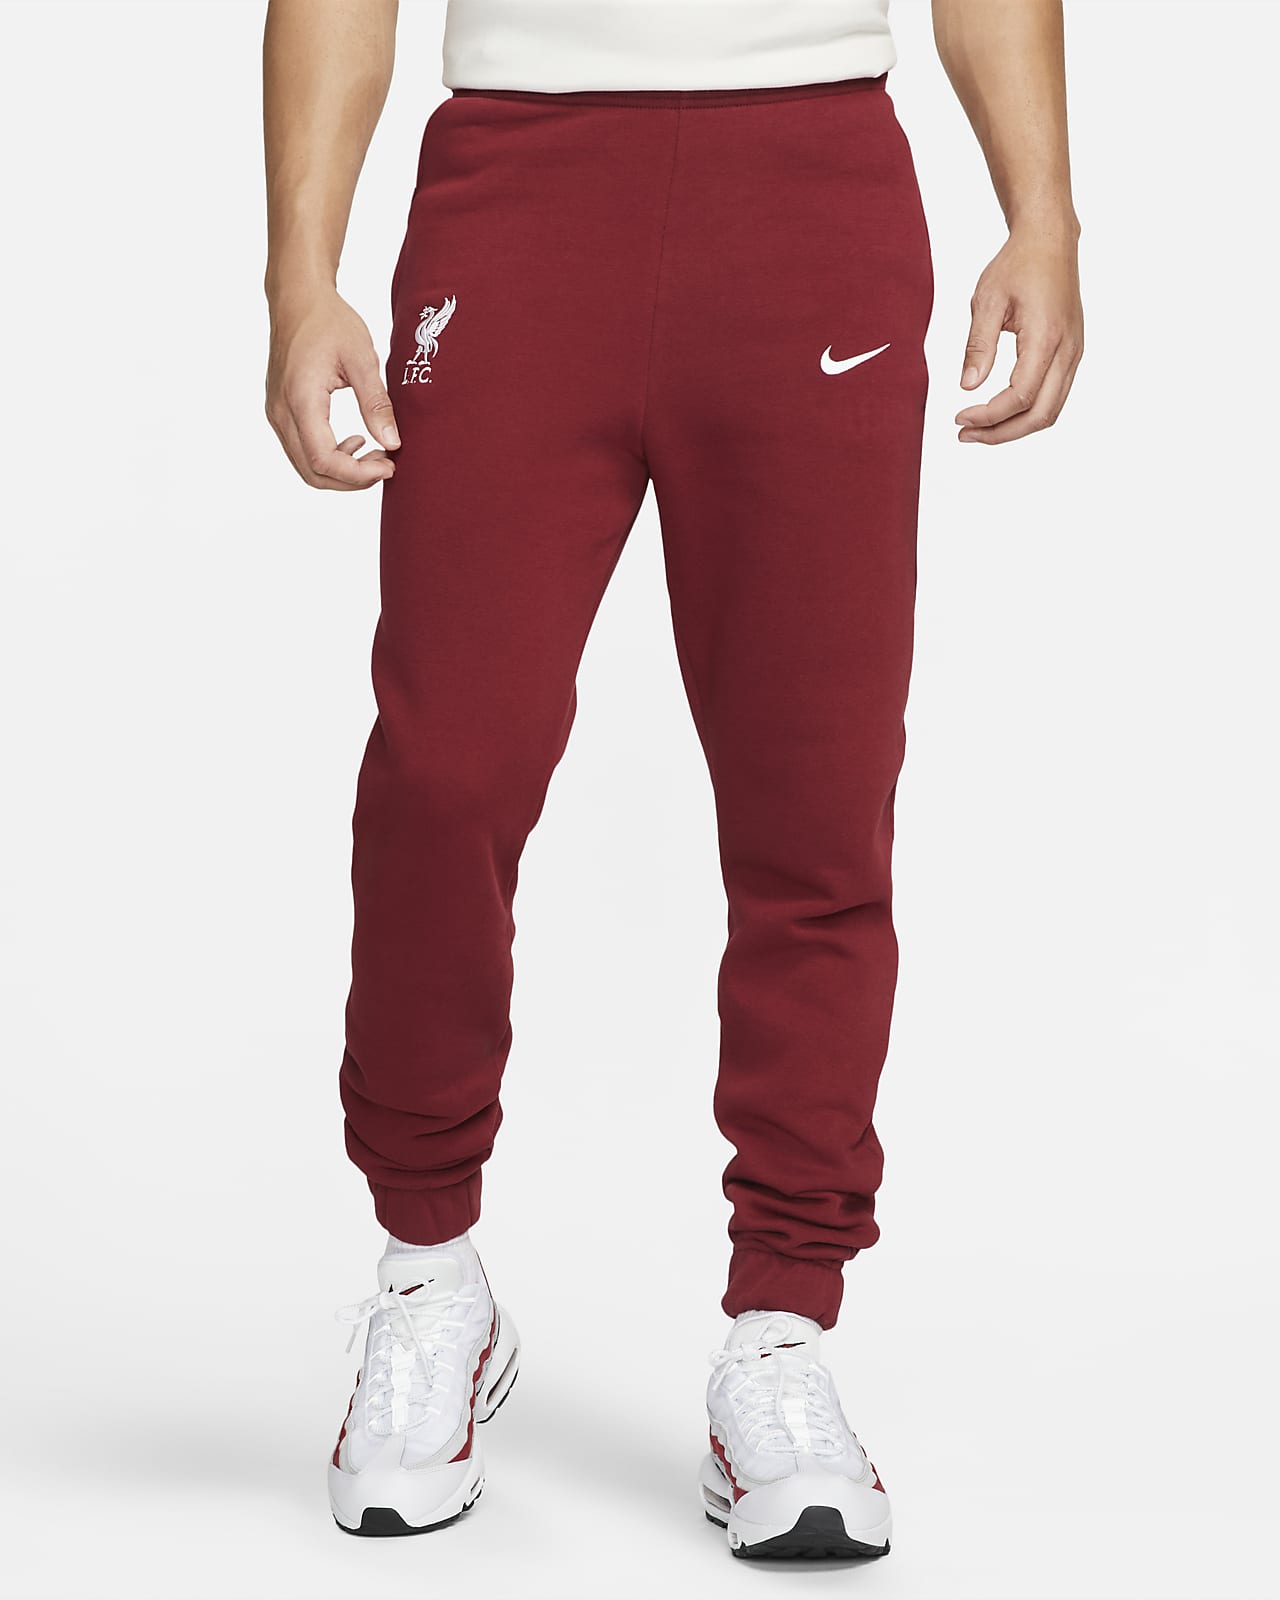 Liverpool FC Men's Nike Soccer Fleece Pants